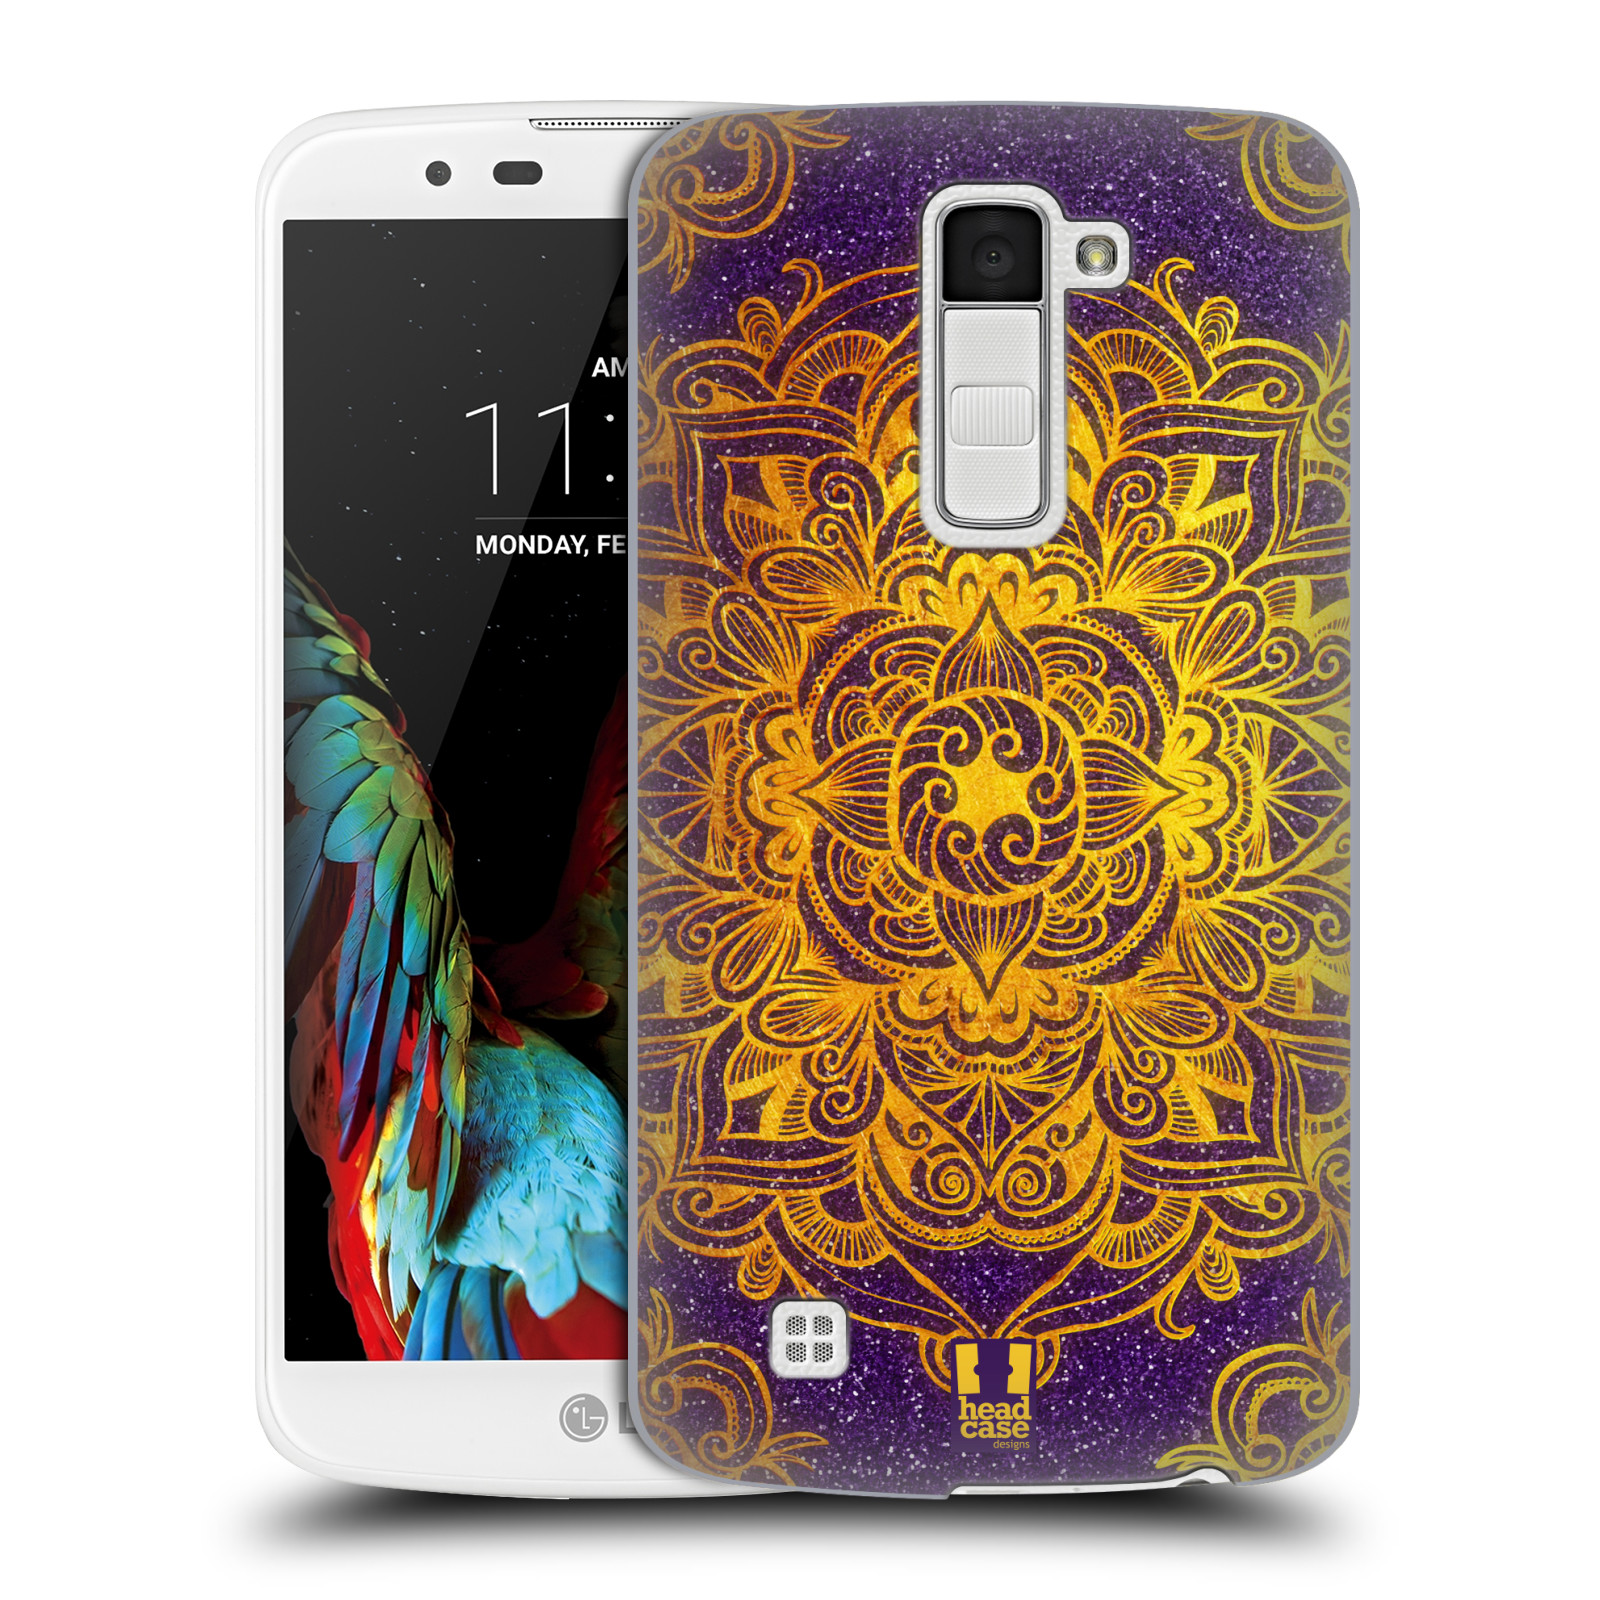 HEAD CASE plastový obal na mobil LG K10 vzor Indie Mandala slunce barevná ZLATÁ A FIALOVÁ